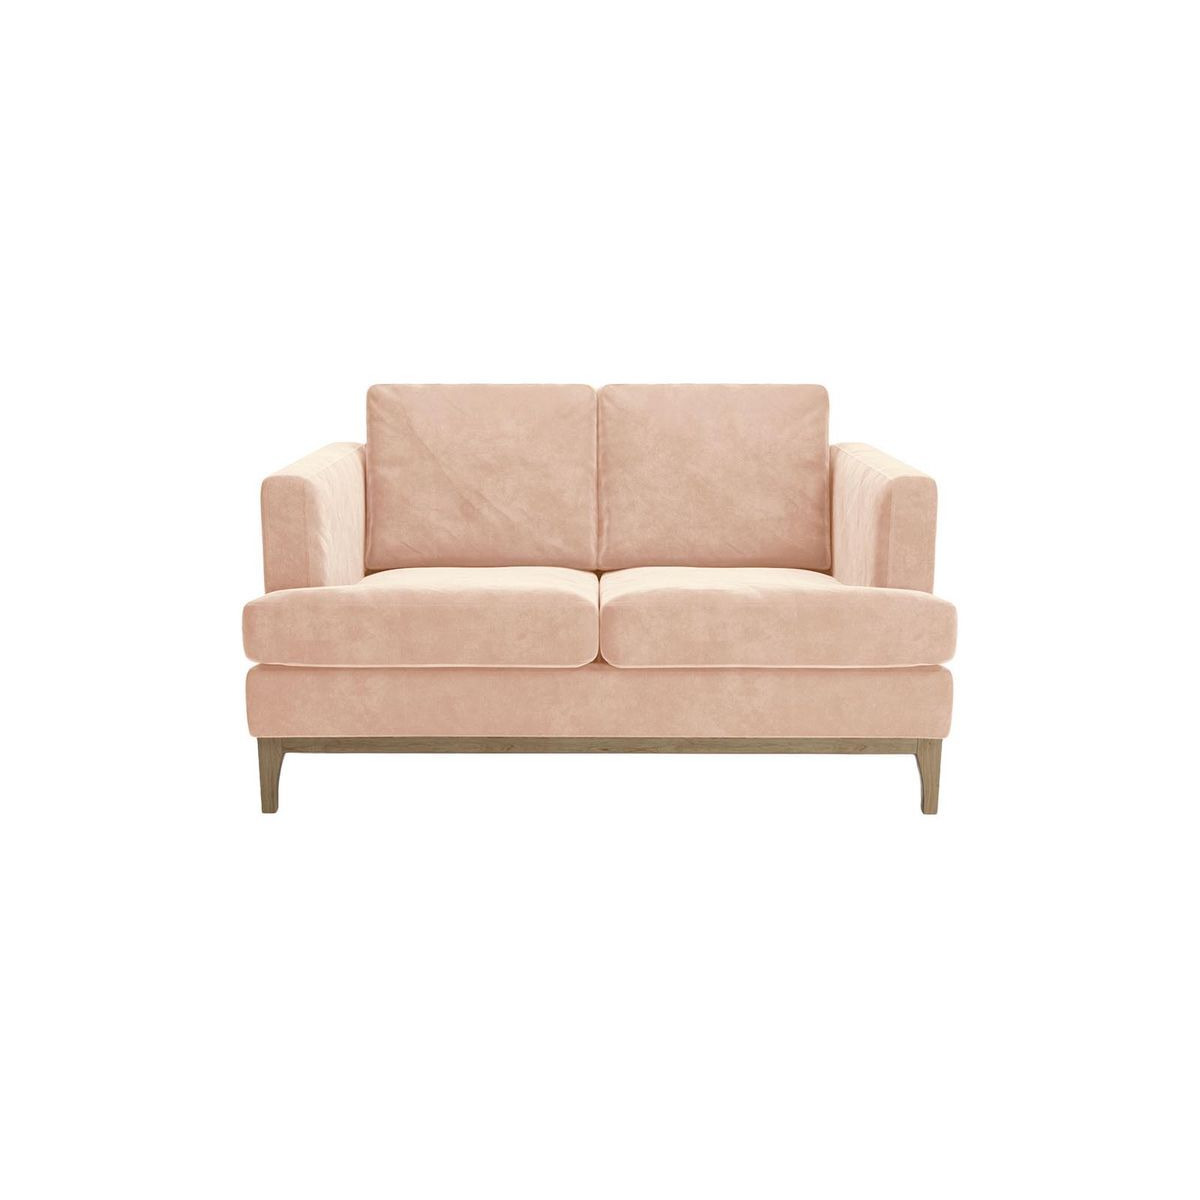 Scarlett Eco 2 Seater Sofa, pink, Leg colour: wax black - image 1